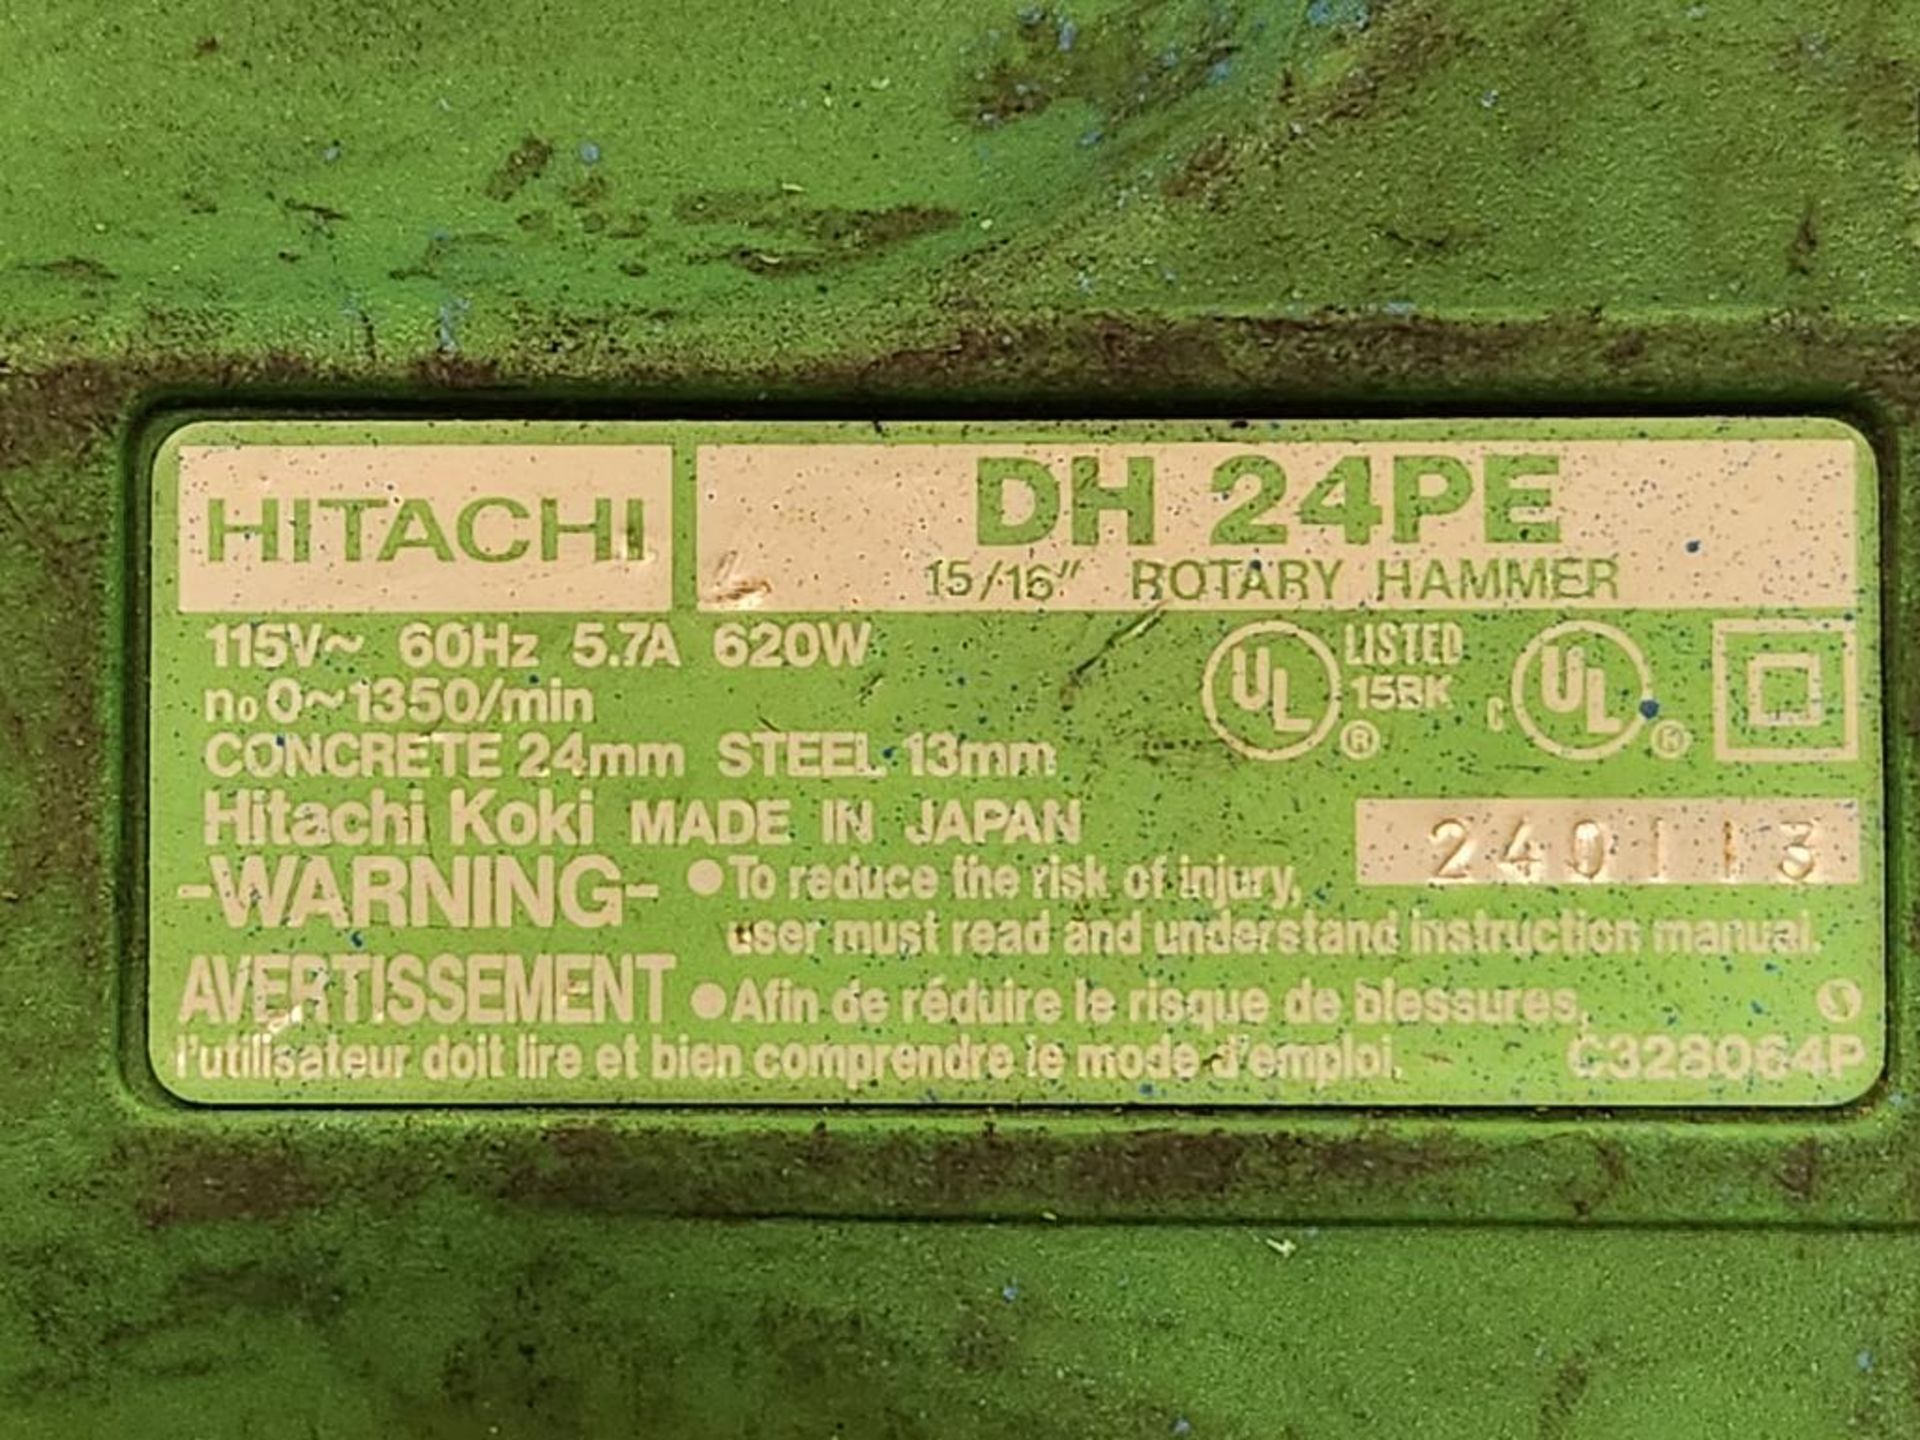 Hitachi 15/16" Rotary Hammer, Model DH 24PE, S/N 240113 - Image 4 of 4